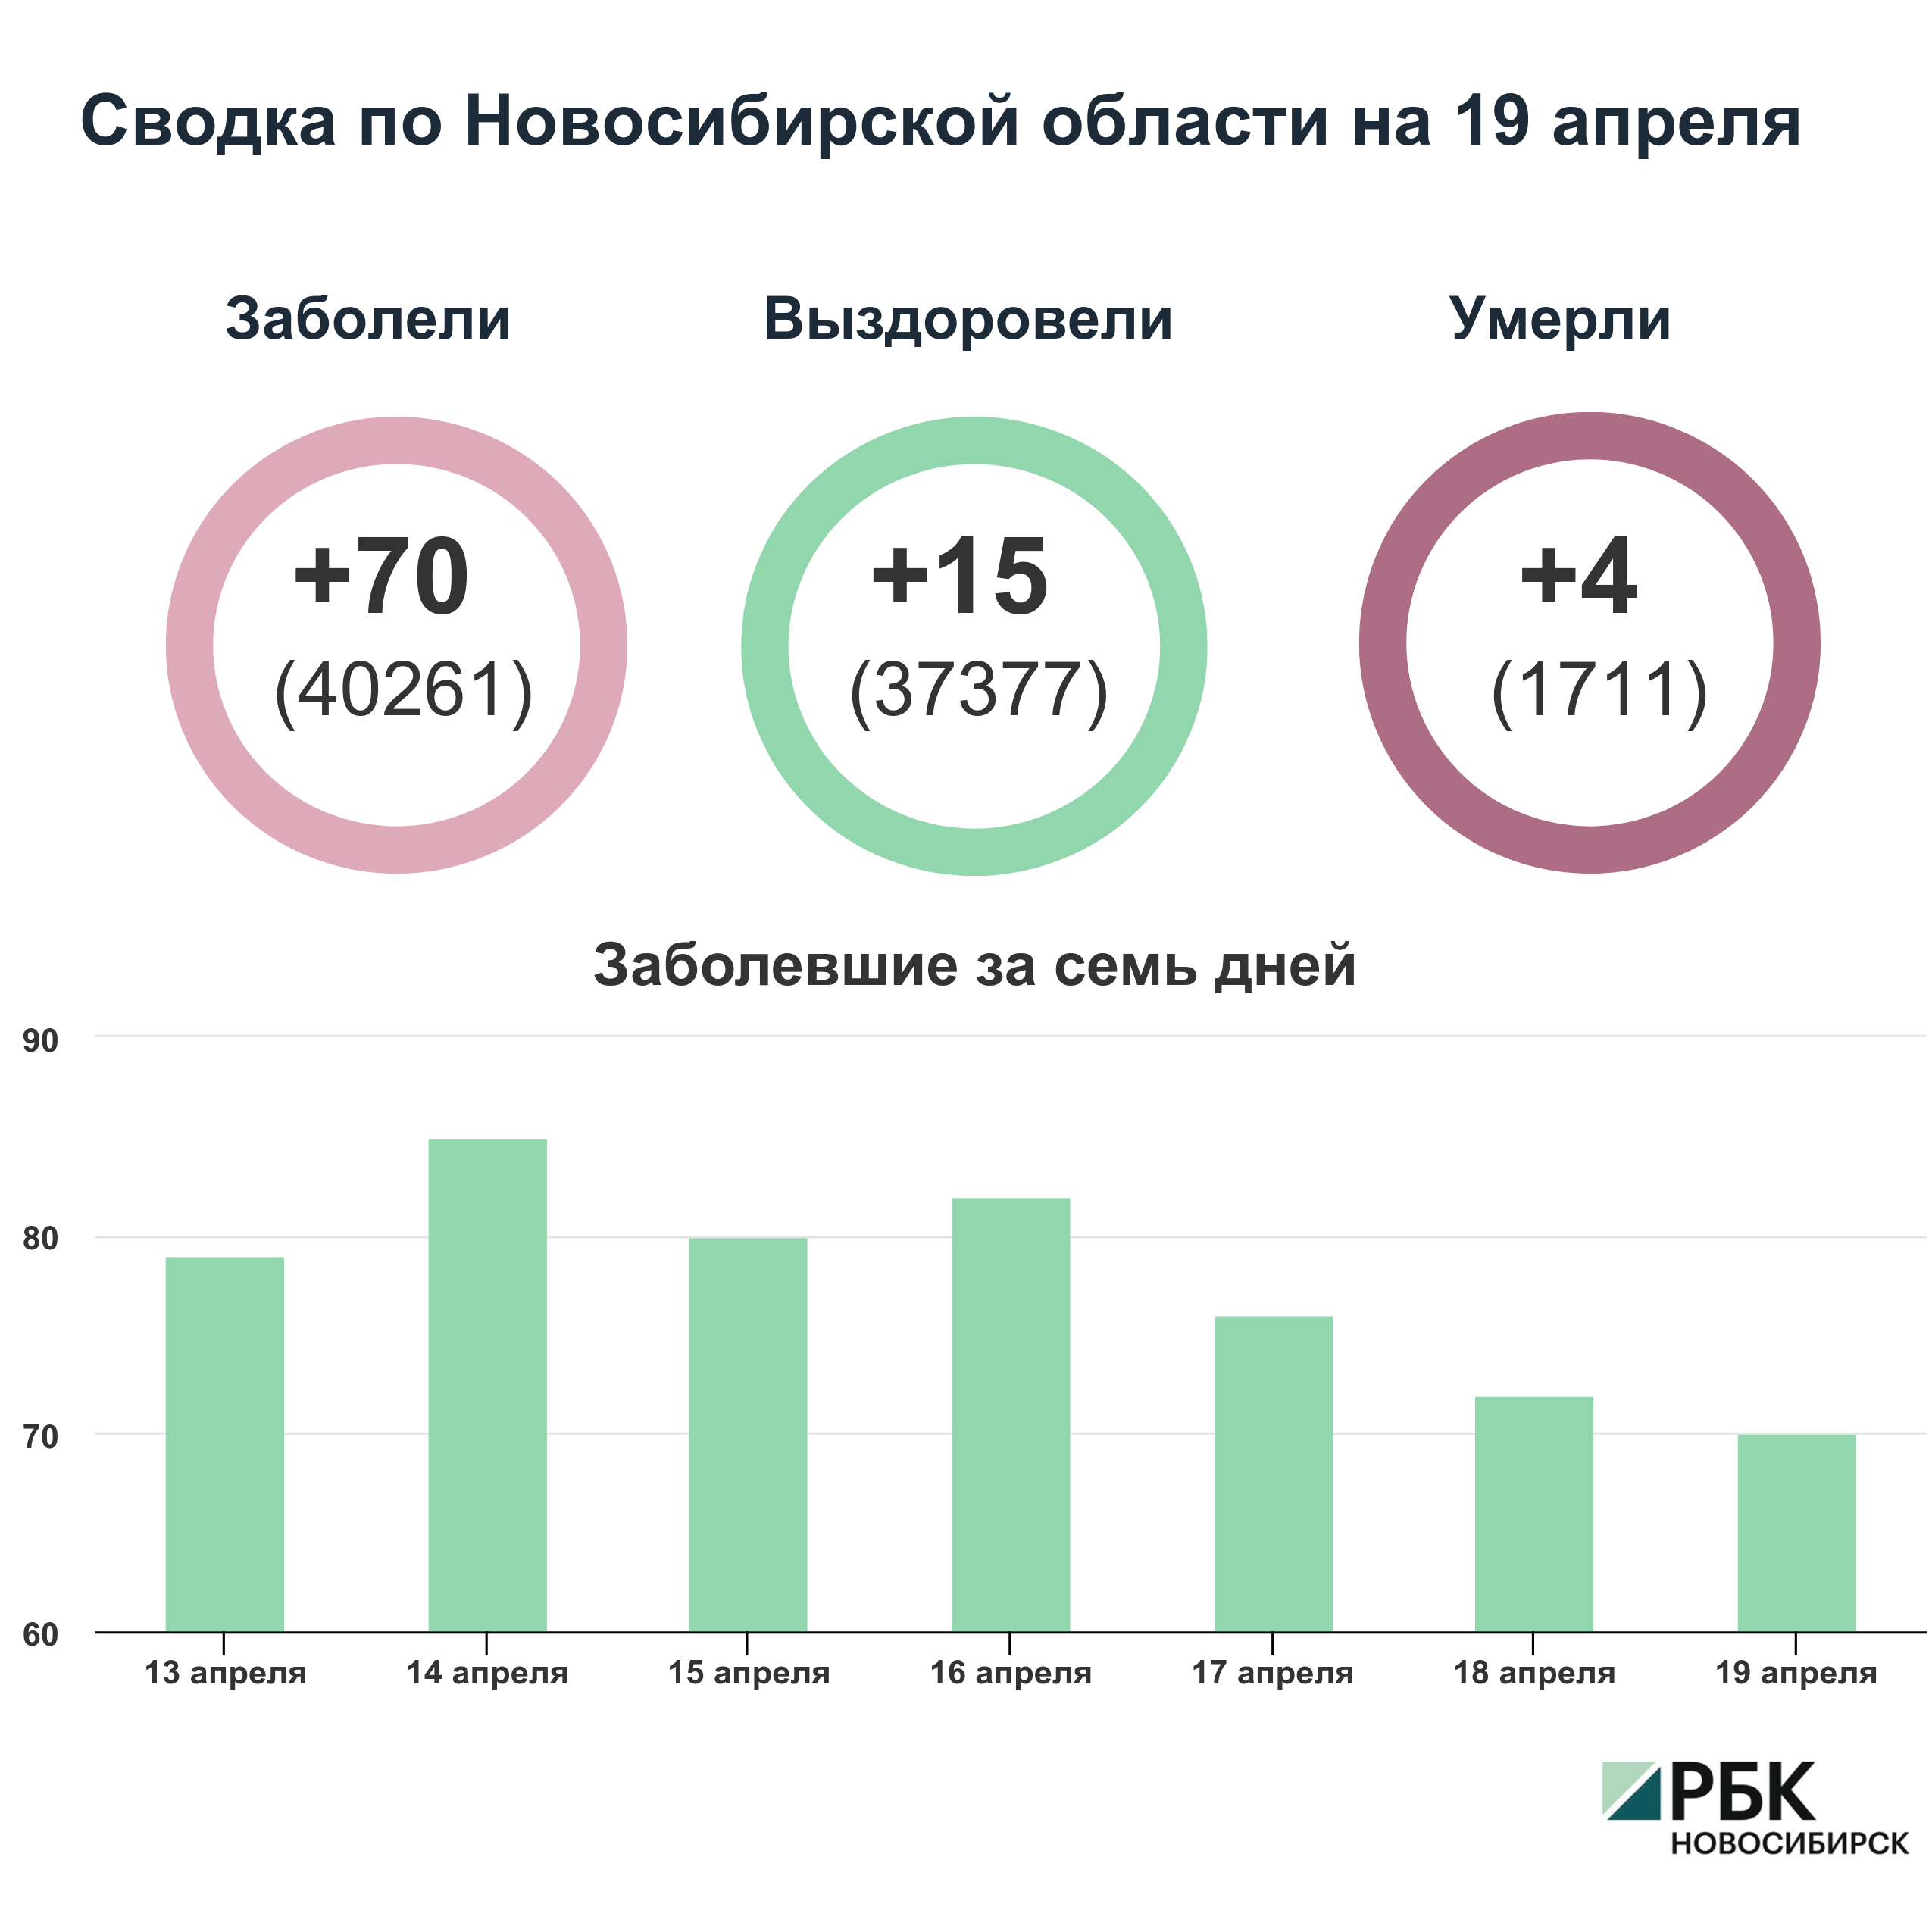 Коронавирус в Новосибирске: сводка на 19 апреля